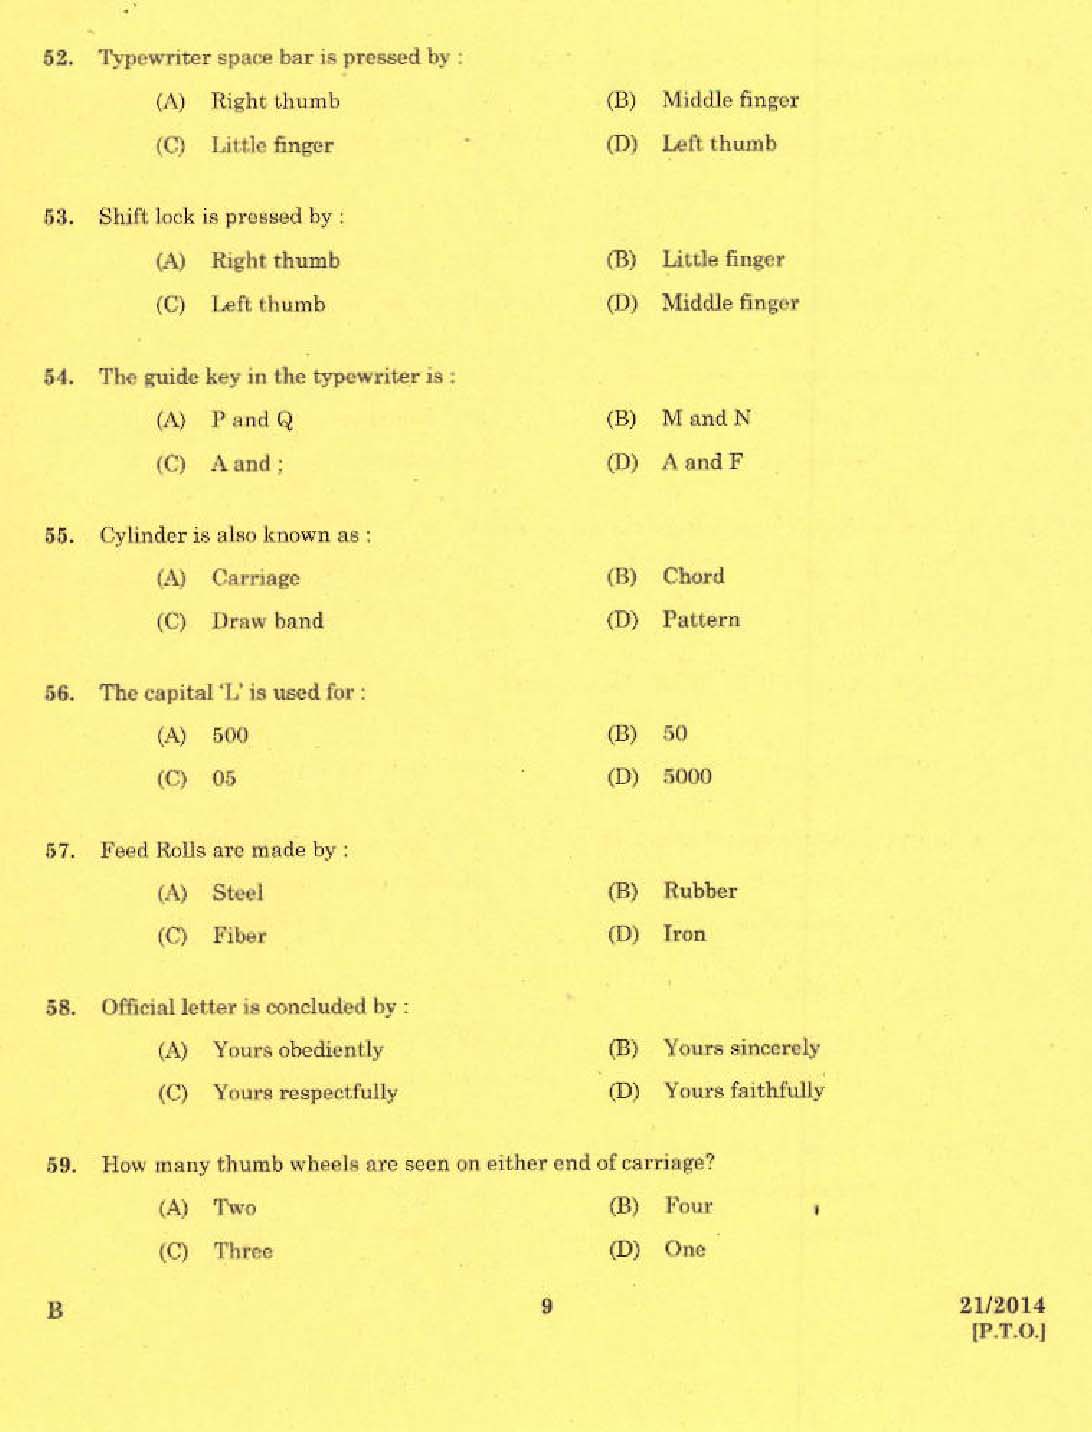 Kerala PSC Stenographer Grade II Exam 2014 Question Paper Code 212014 7